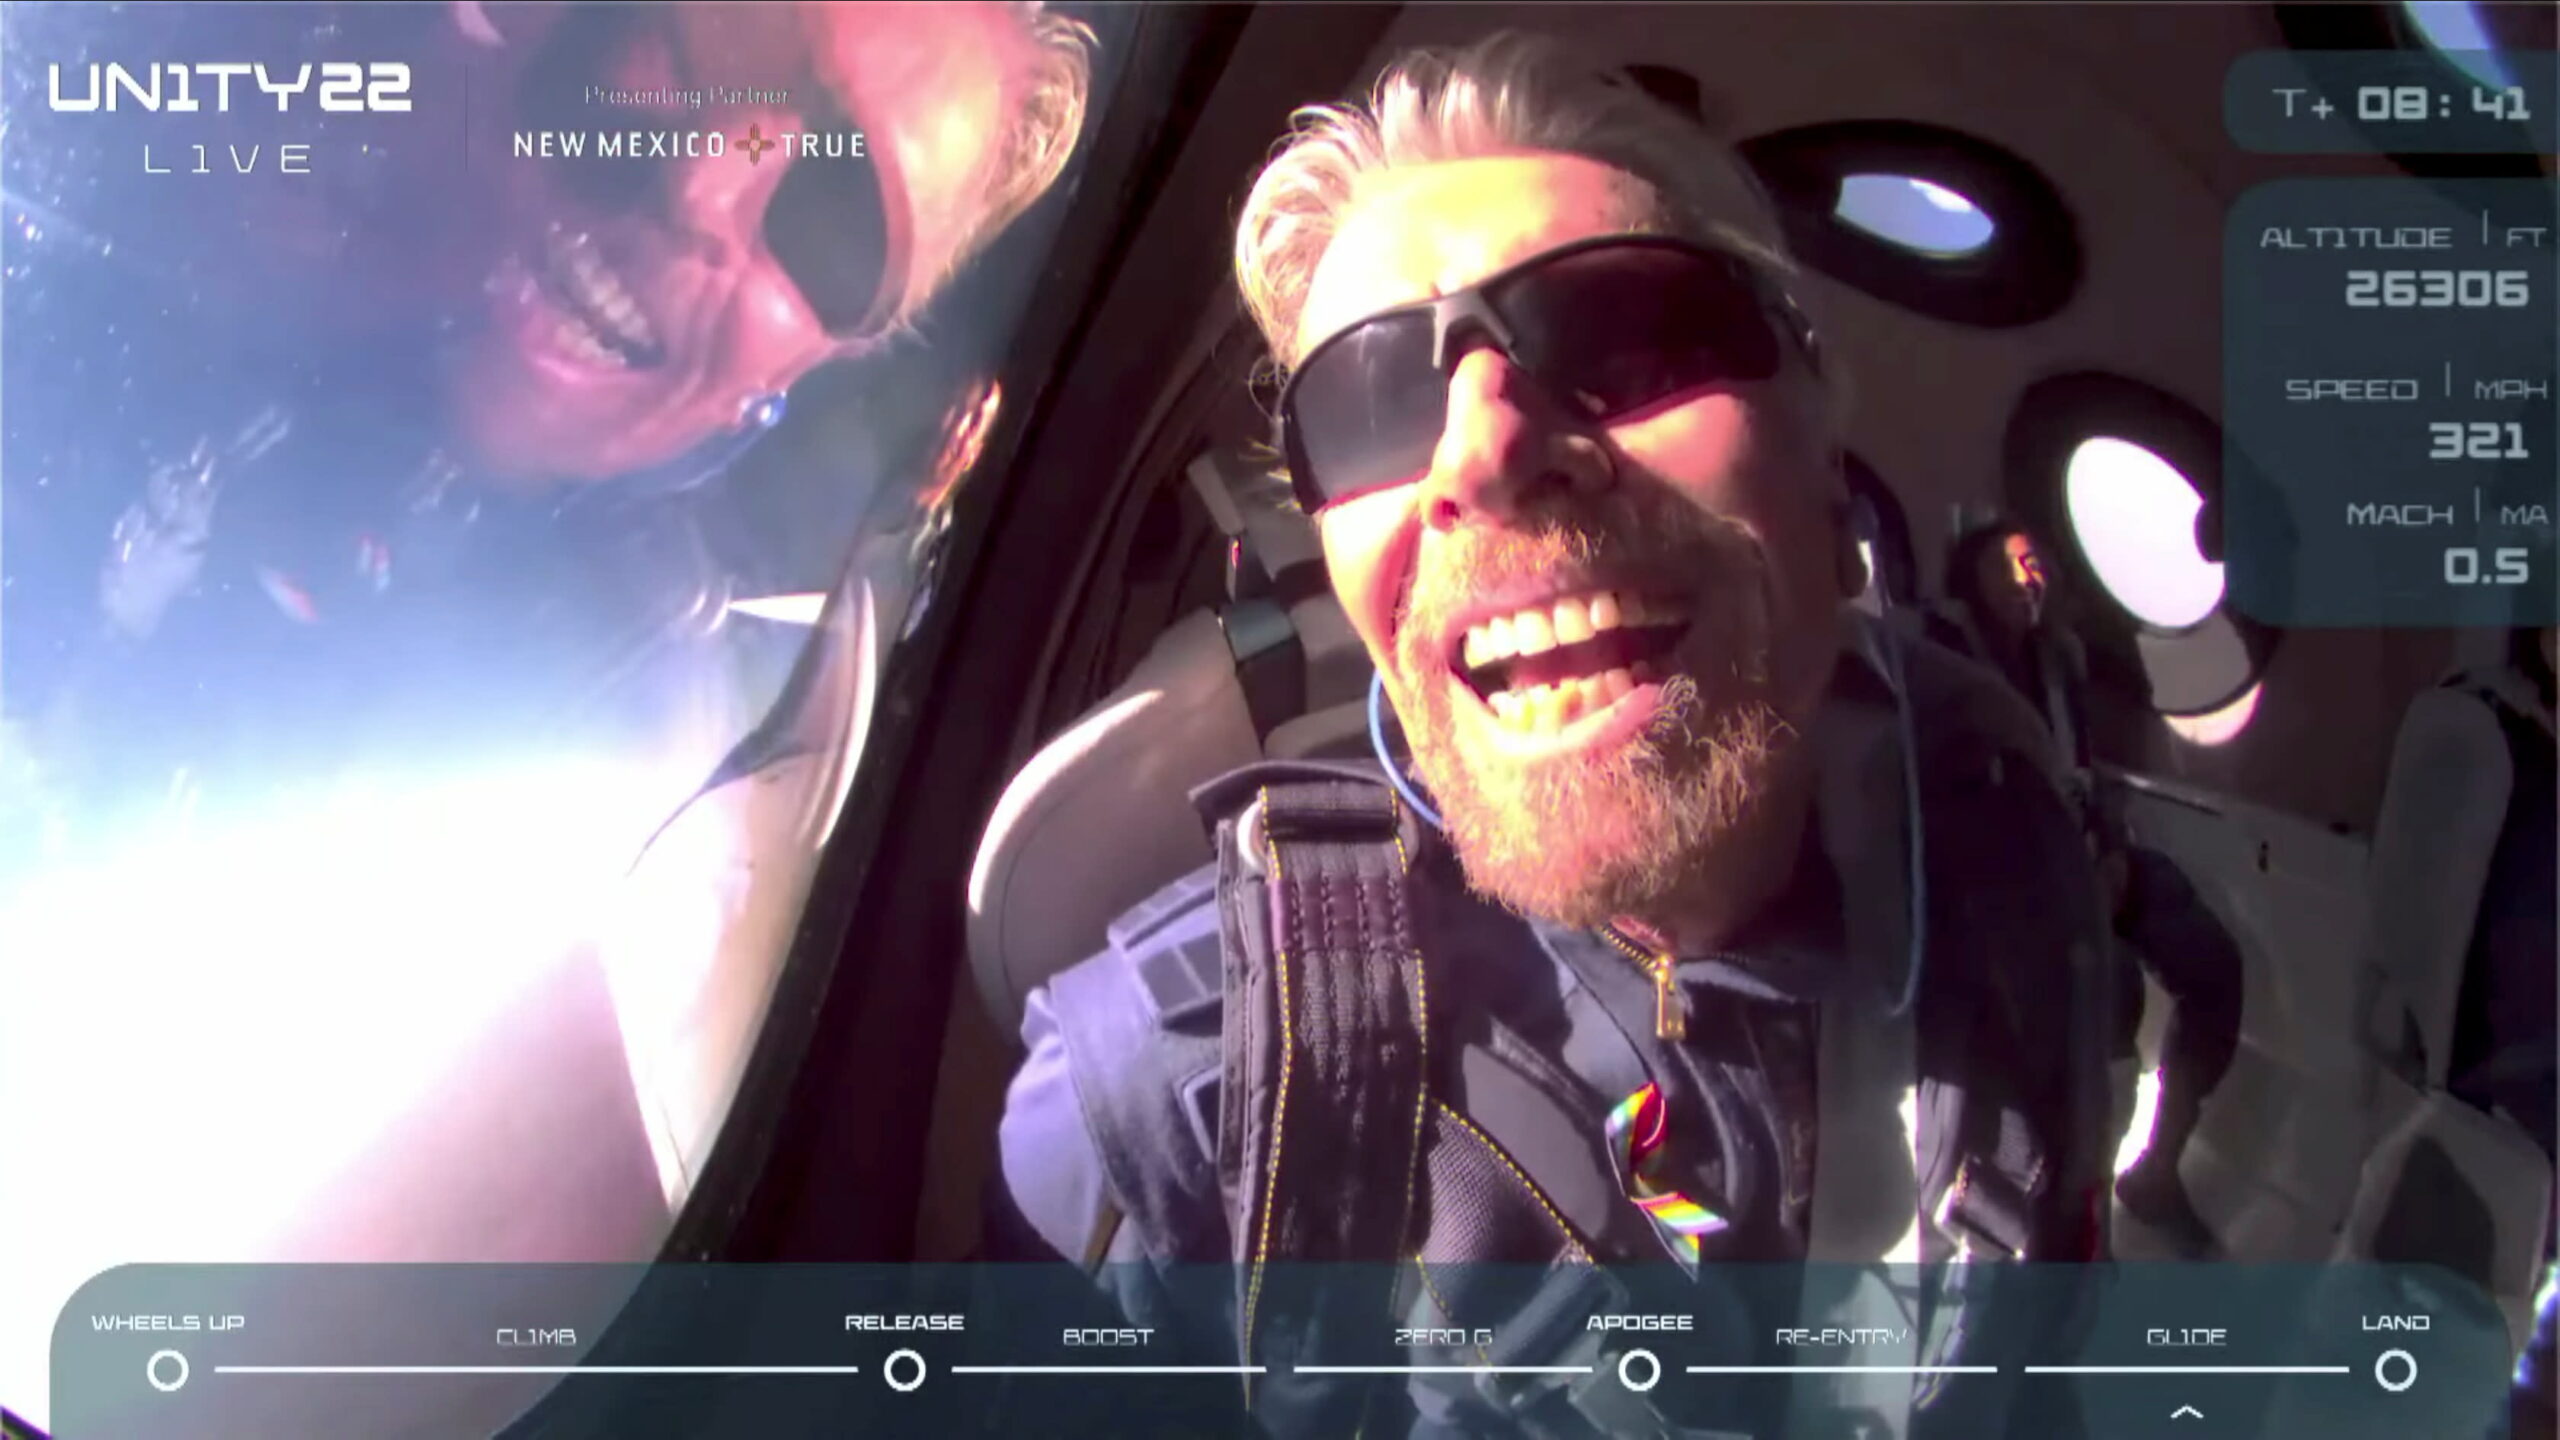 Richard Branson reaches house on Virgin Galactic flight